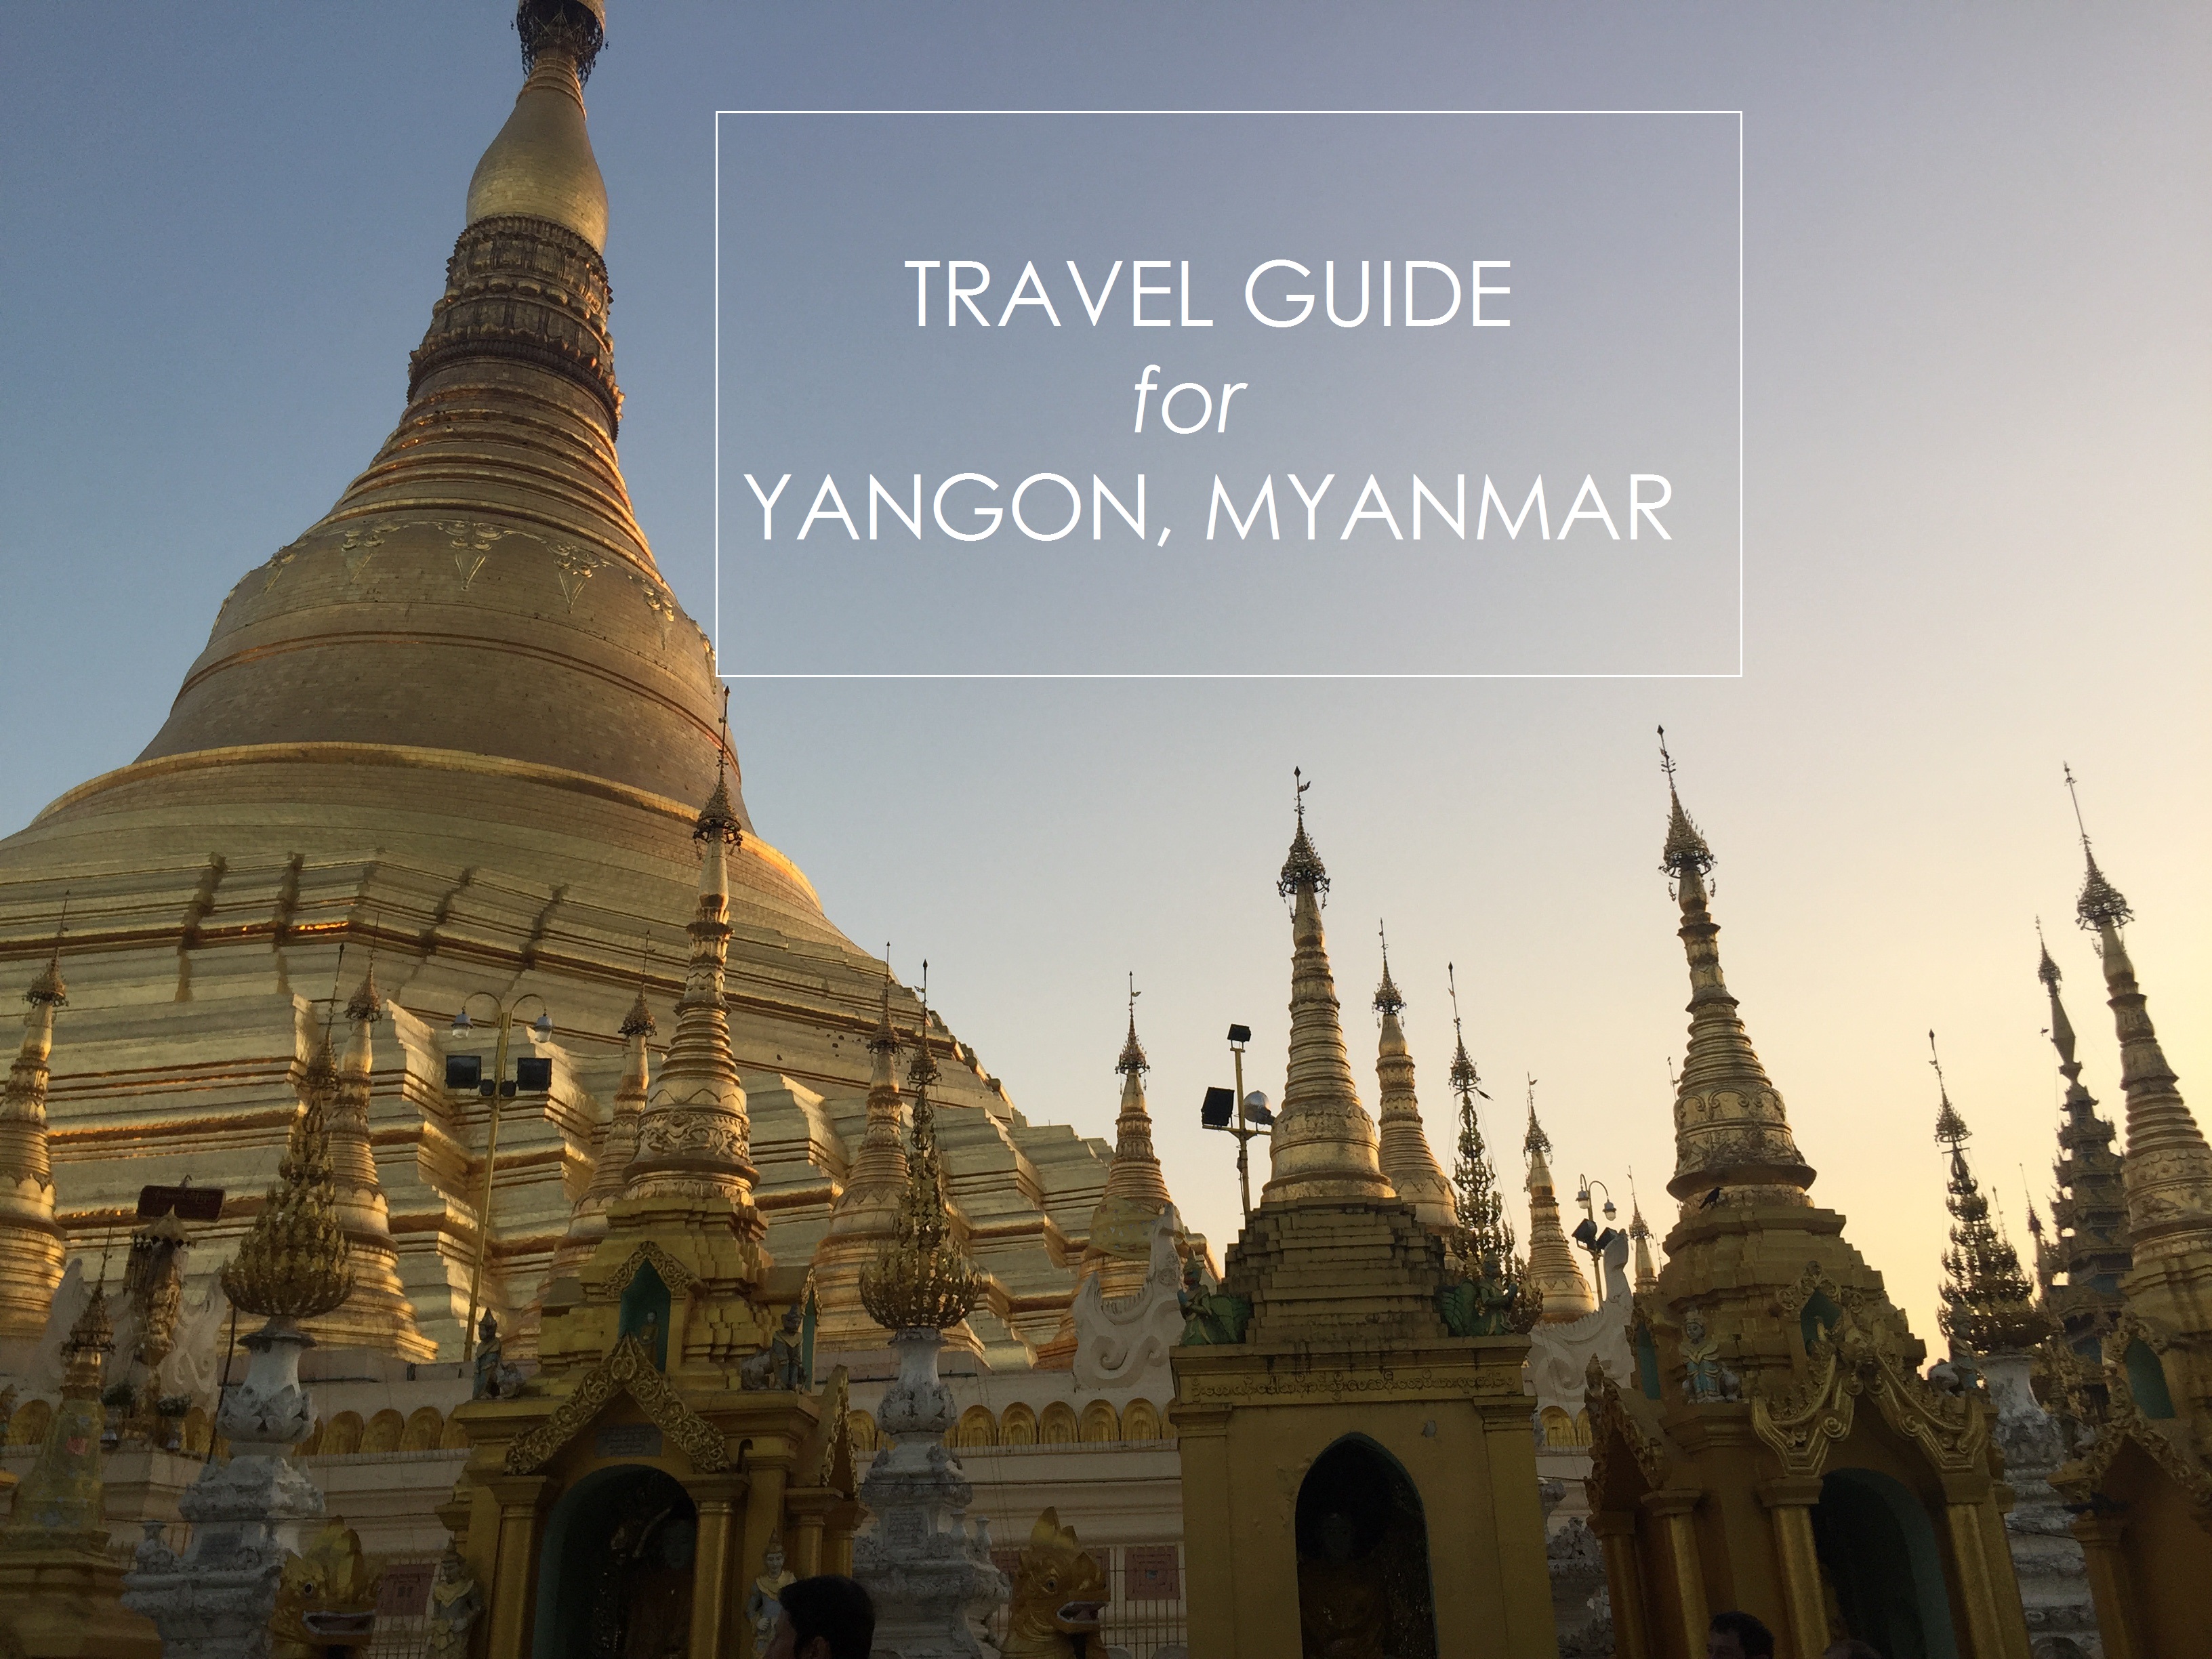 YANGON, MYANMAR